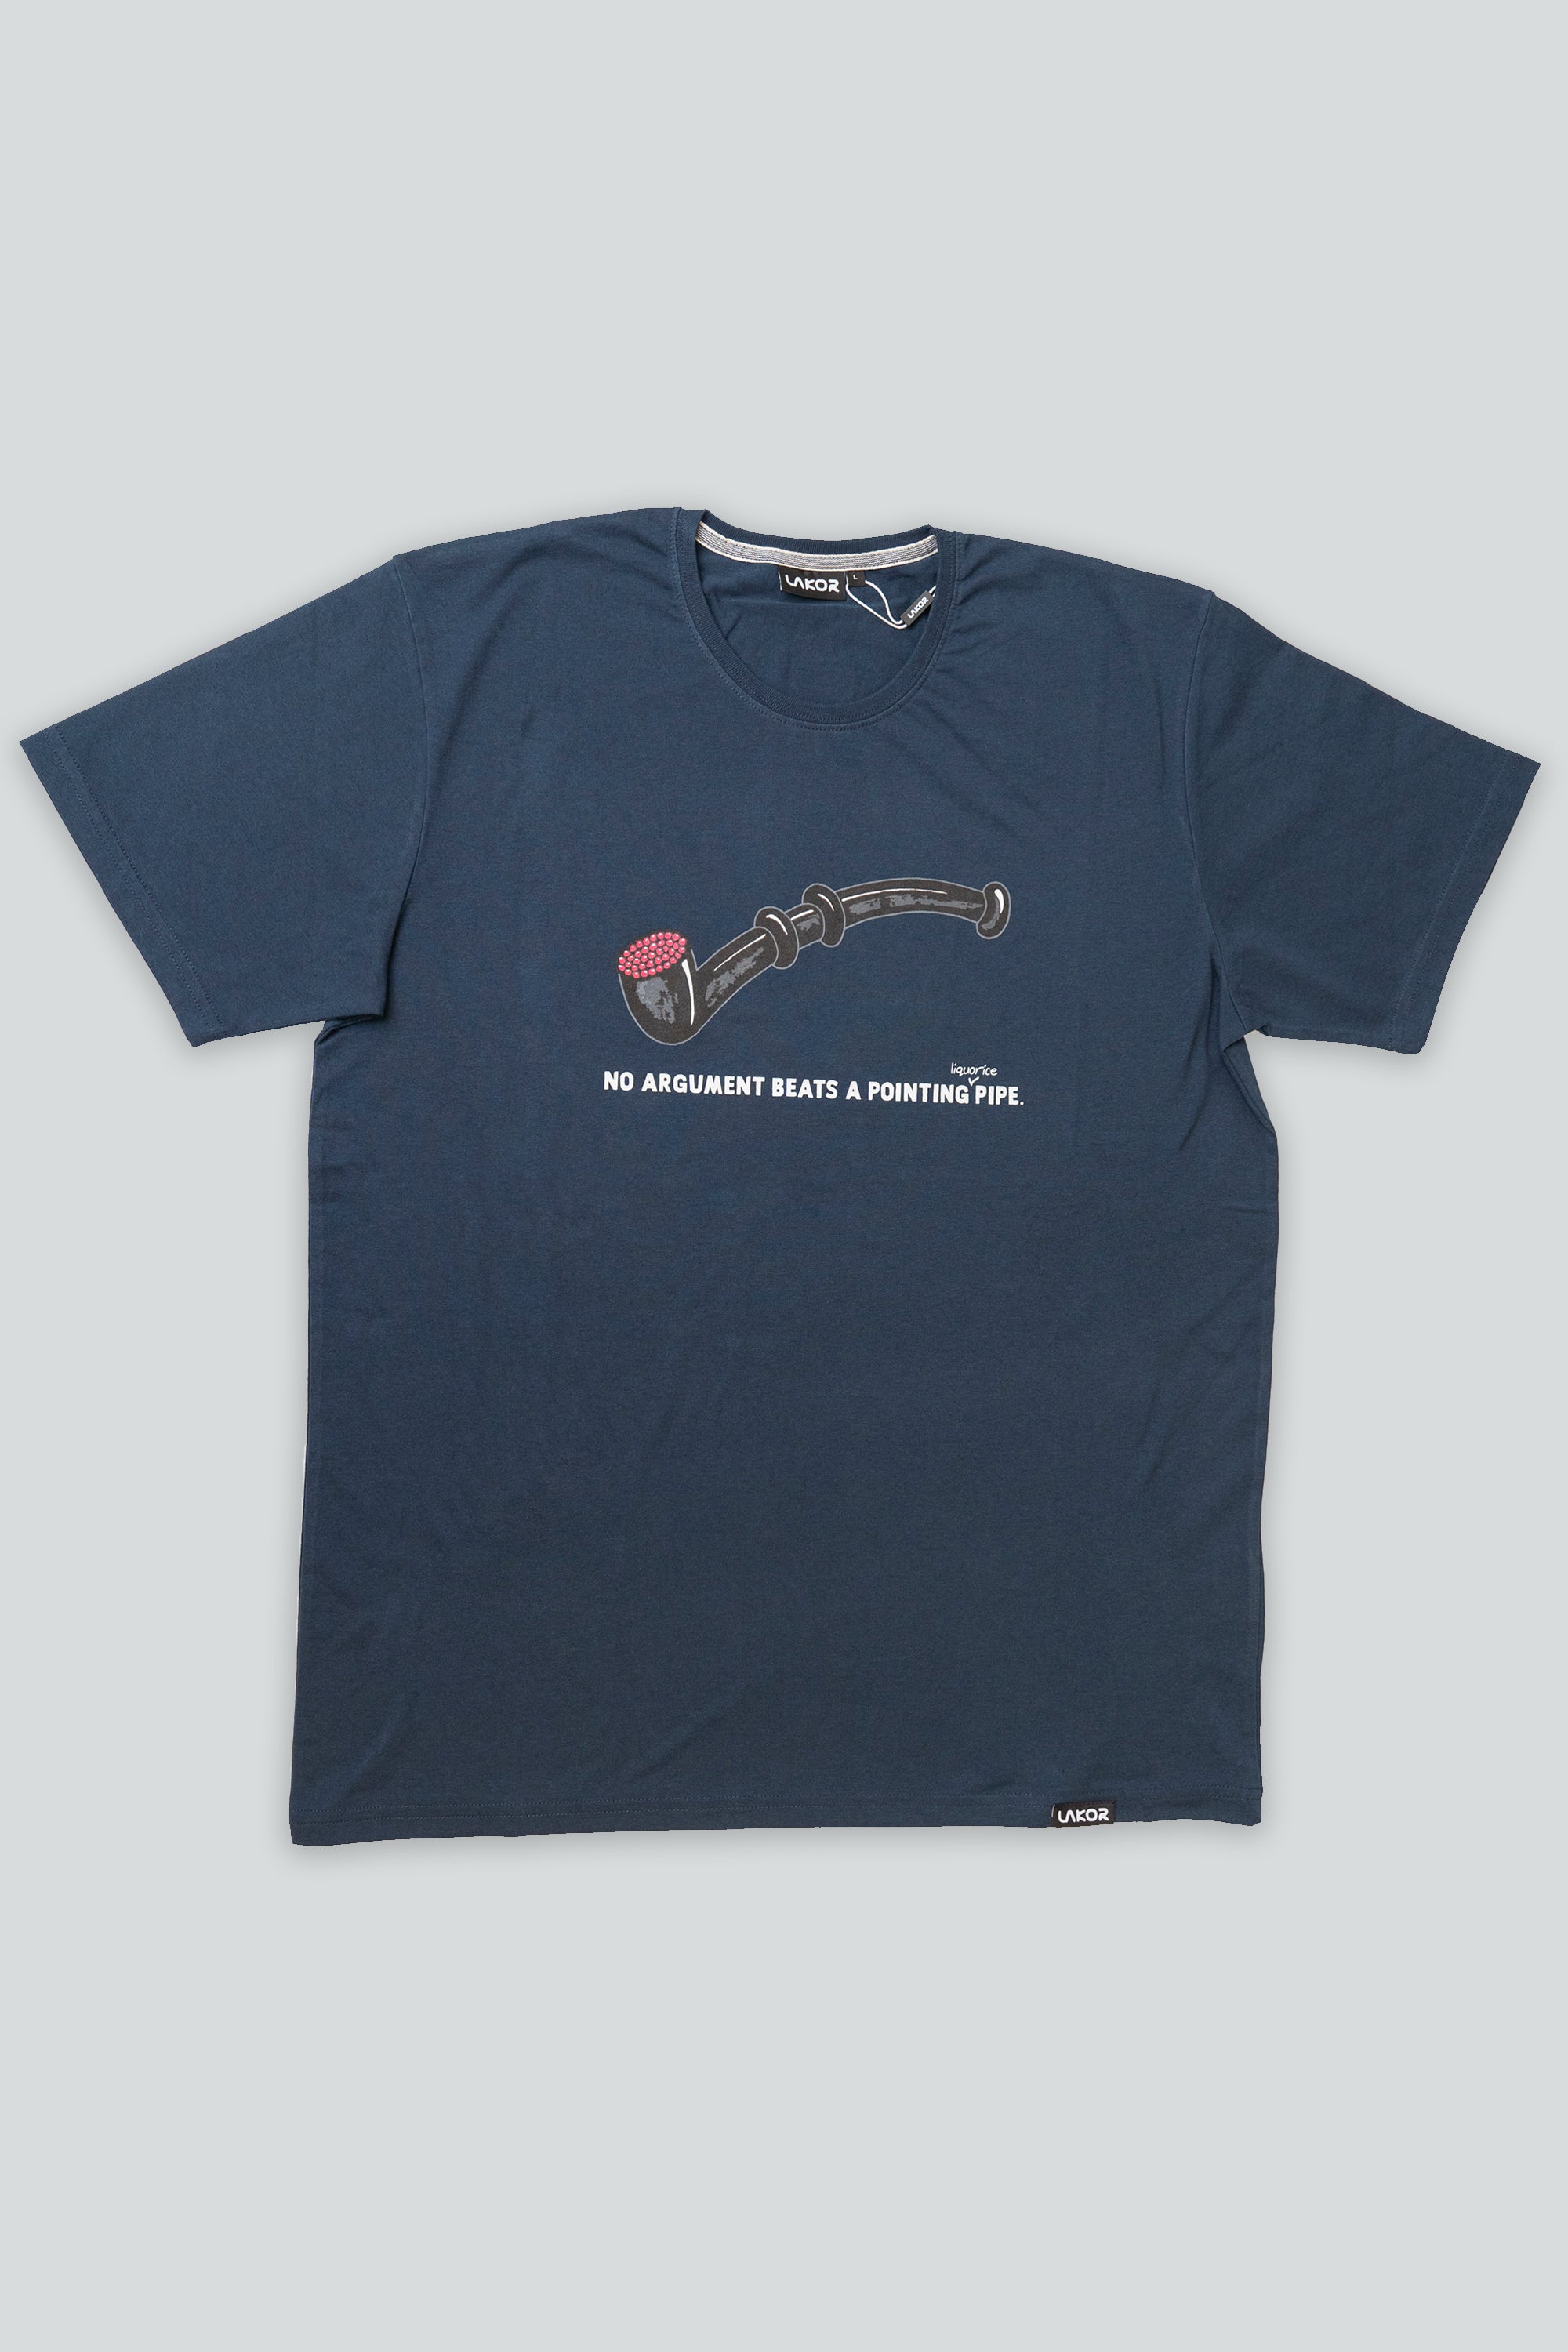 Lakridspibe T-shirt (Navy)